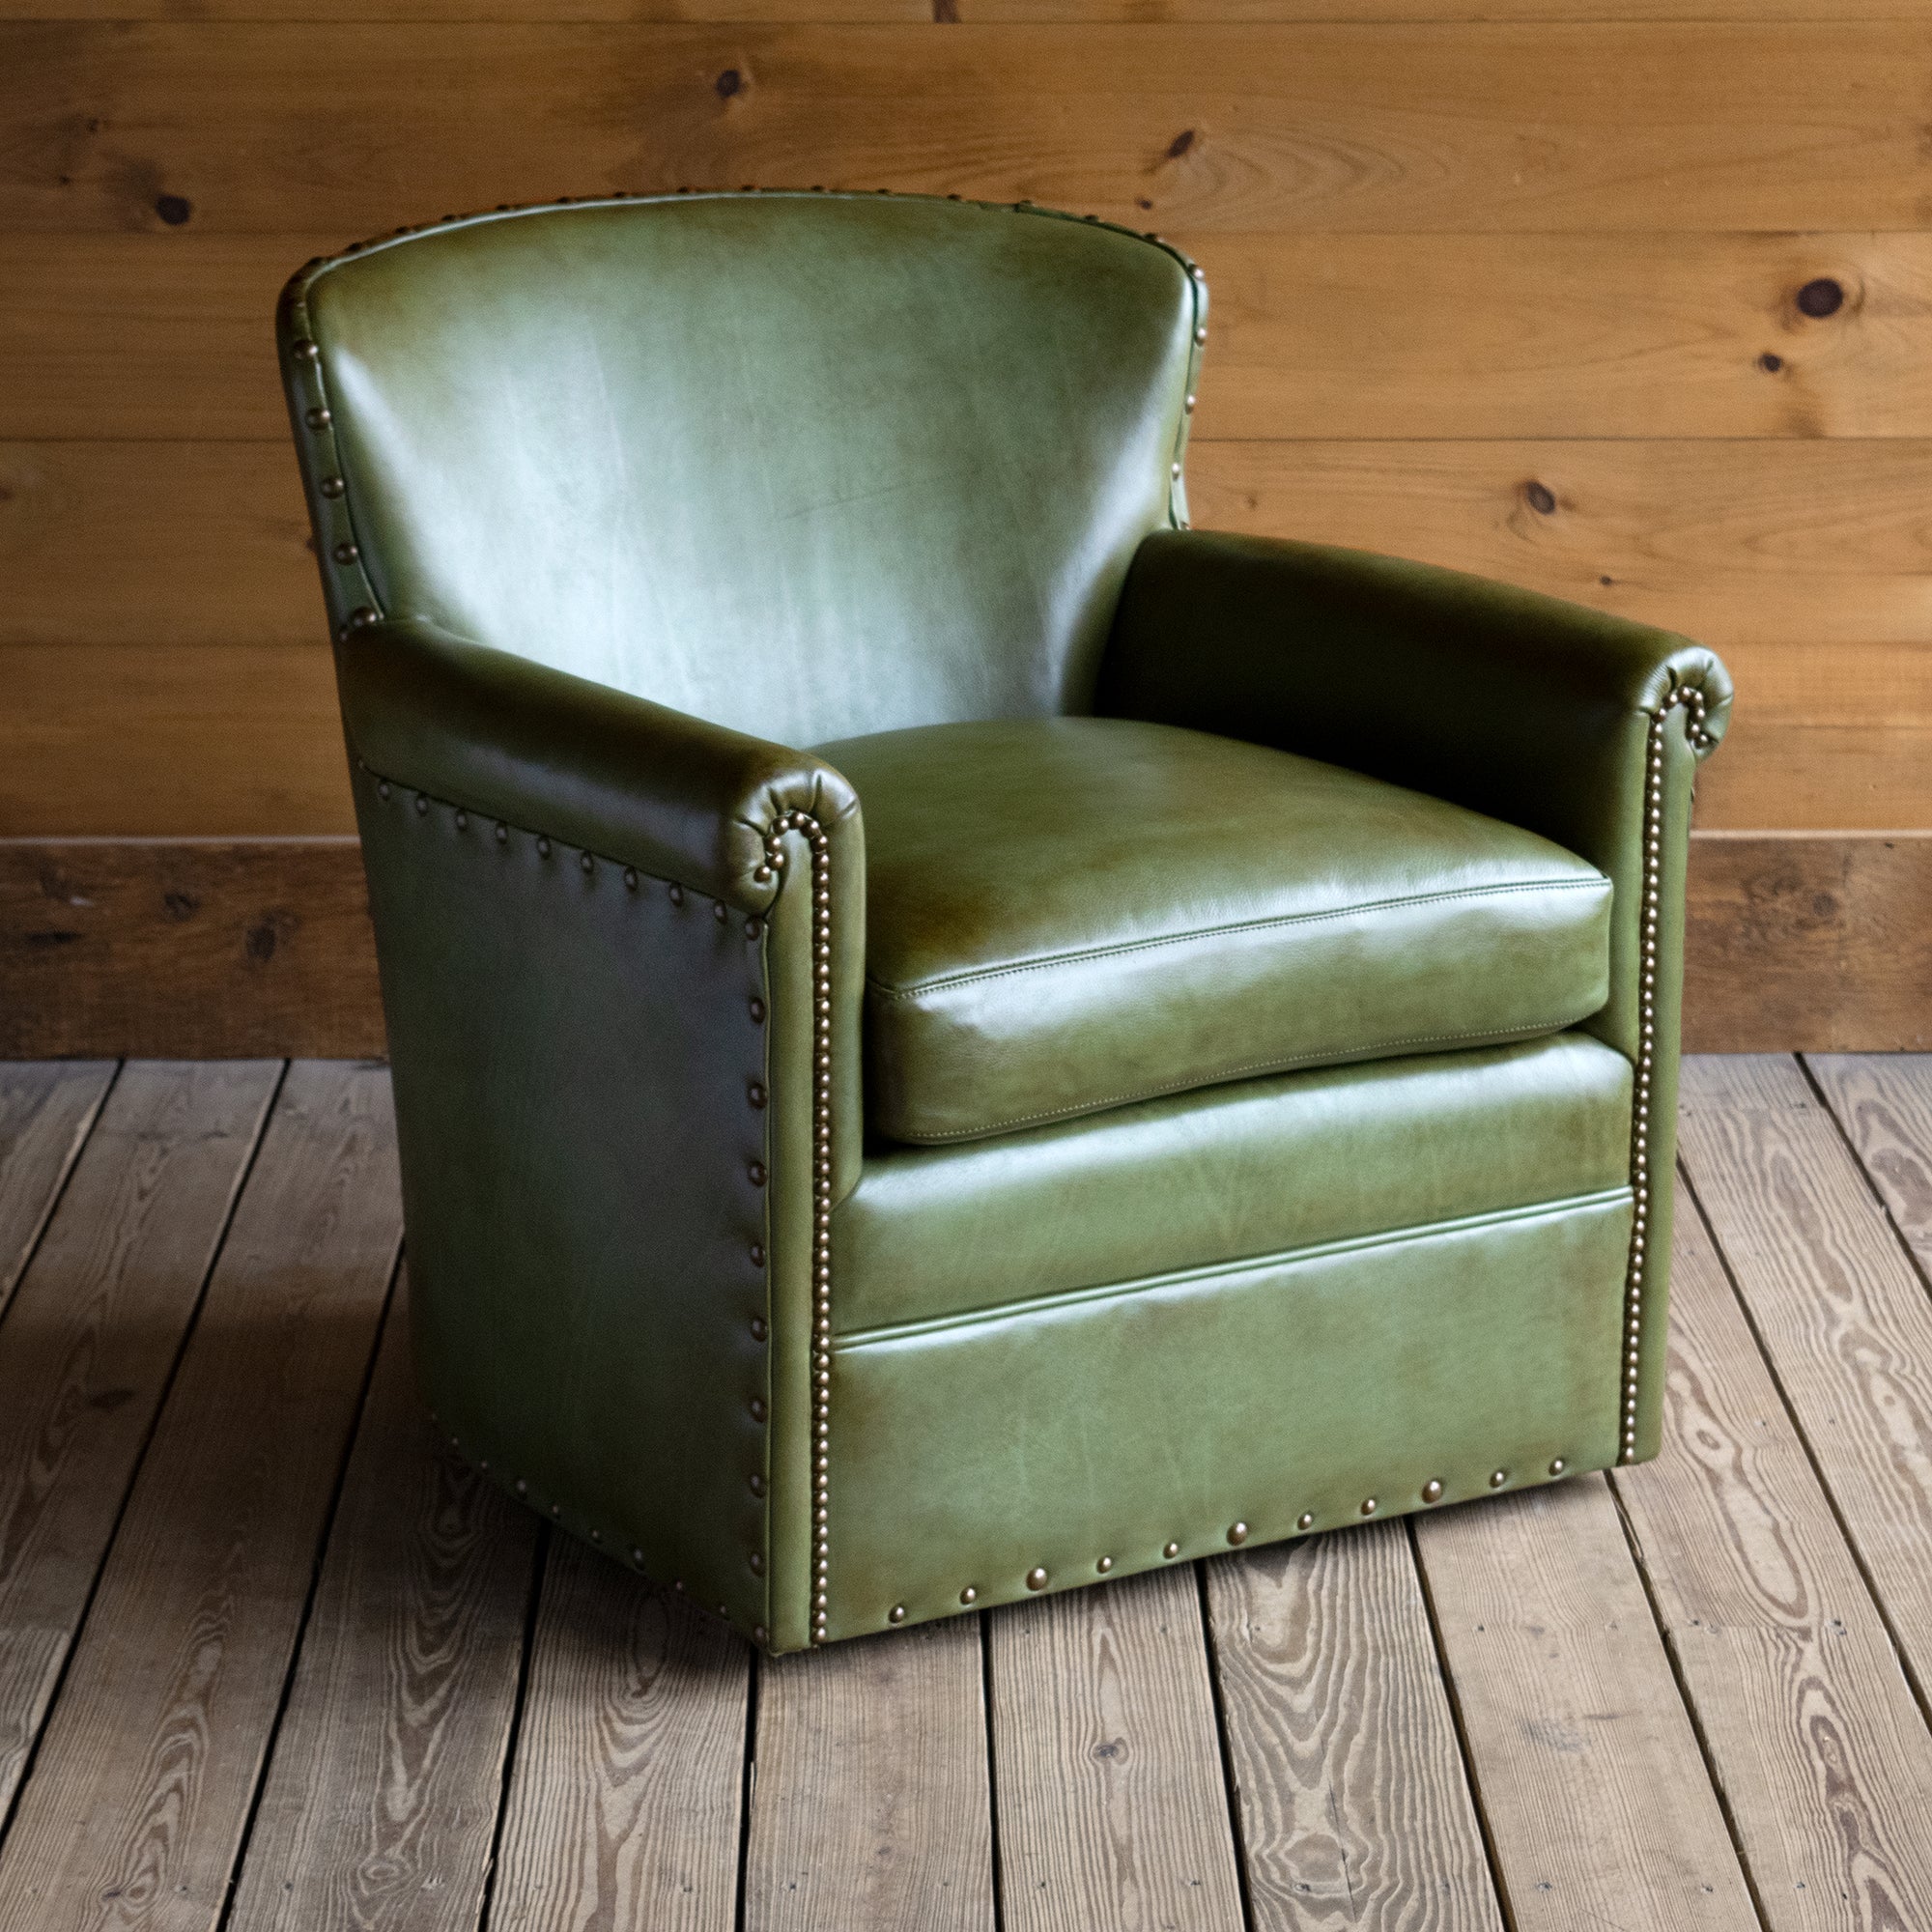 Traveler's Swivel Chair, Green Leather Swivel Chair